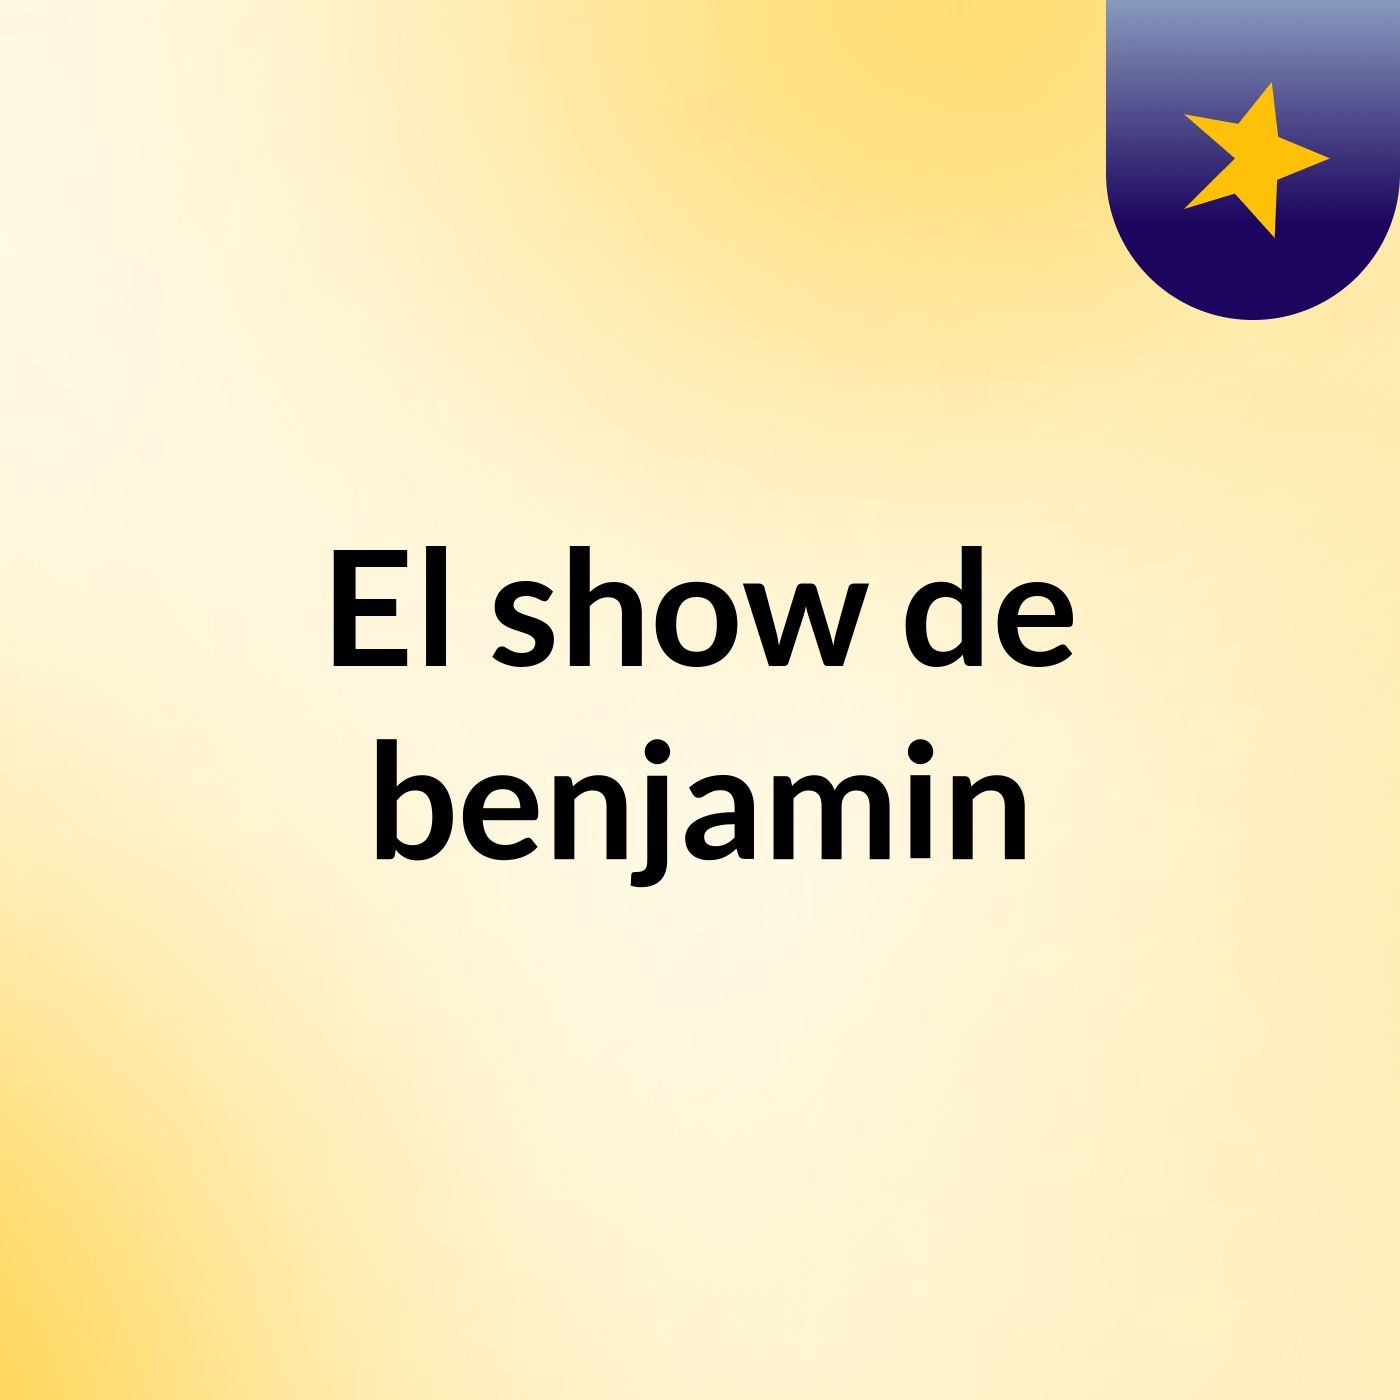 El show de benjamin